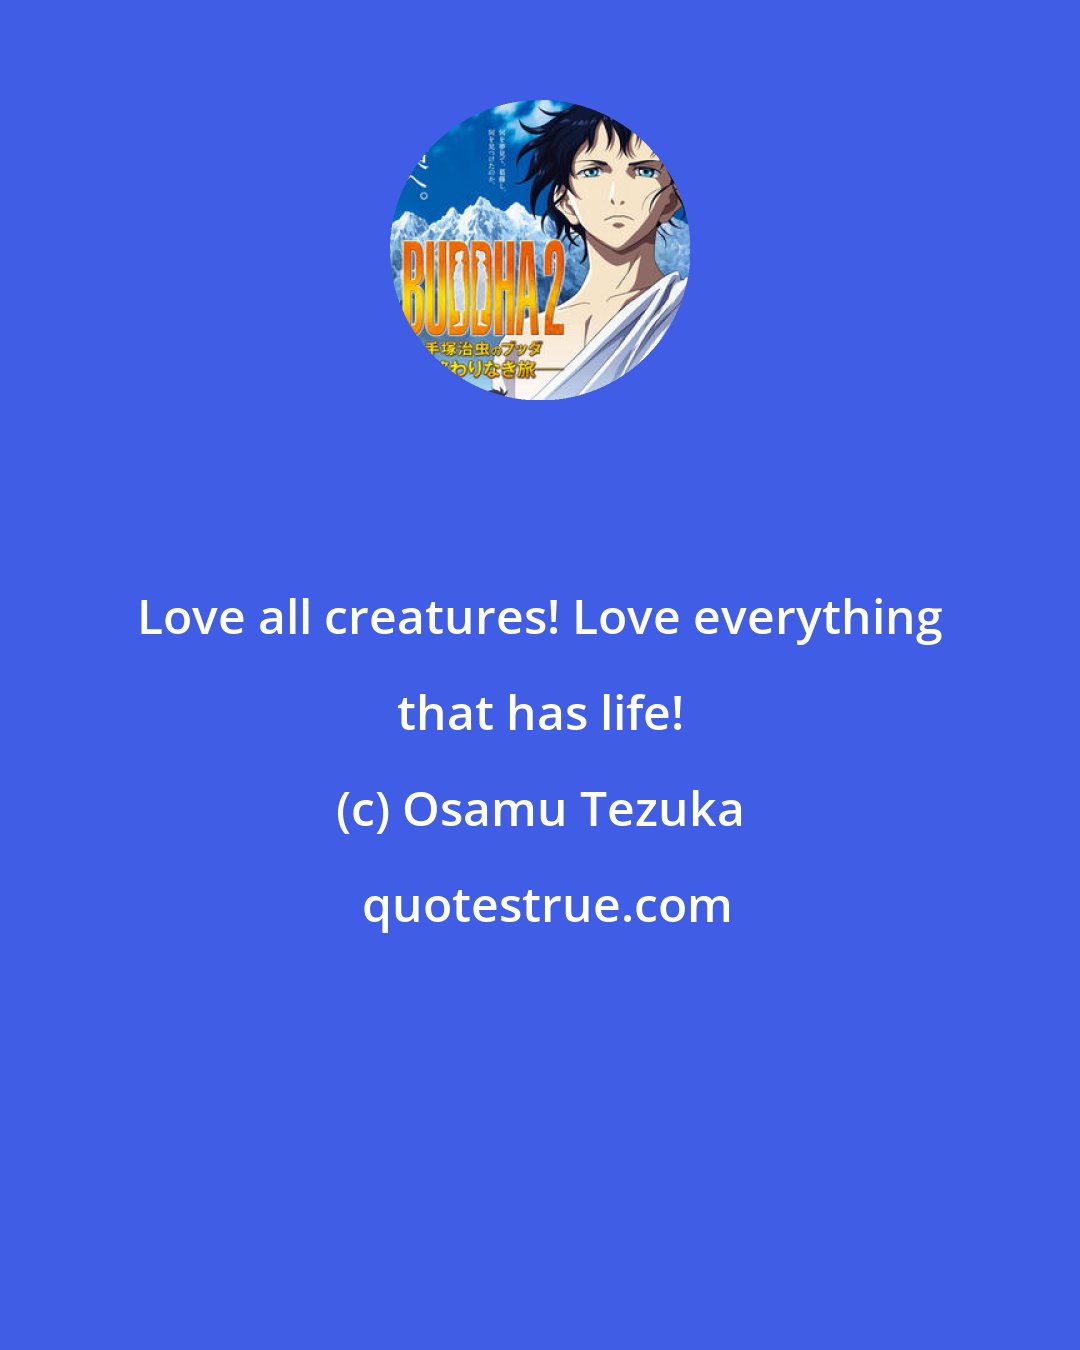 Osamu Tezuka: Love all creatures! Love everything that has life!